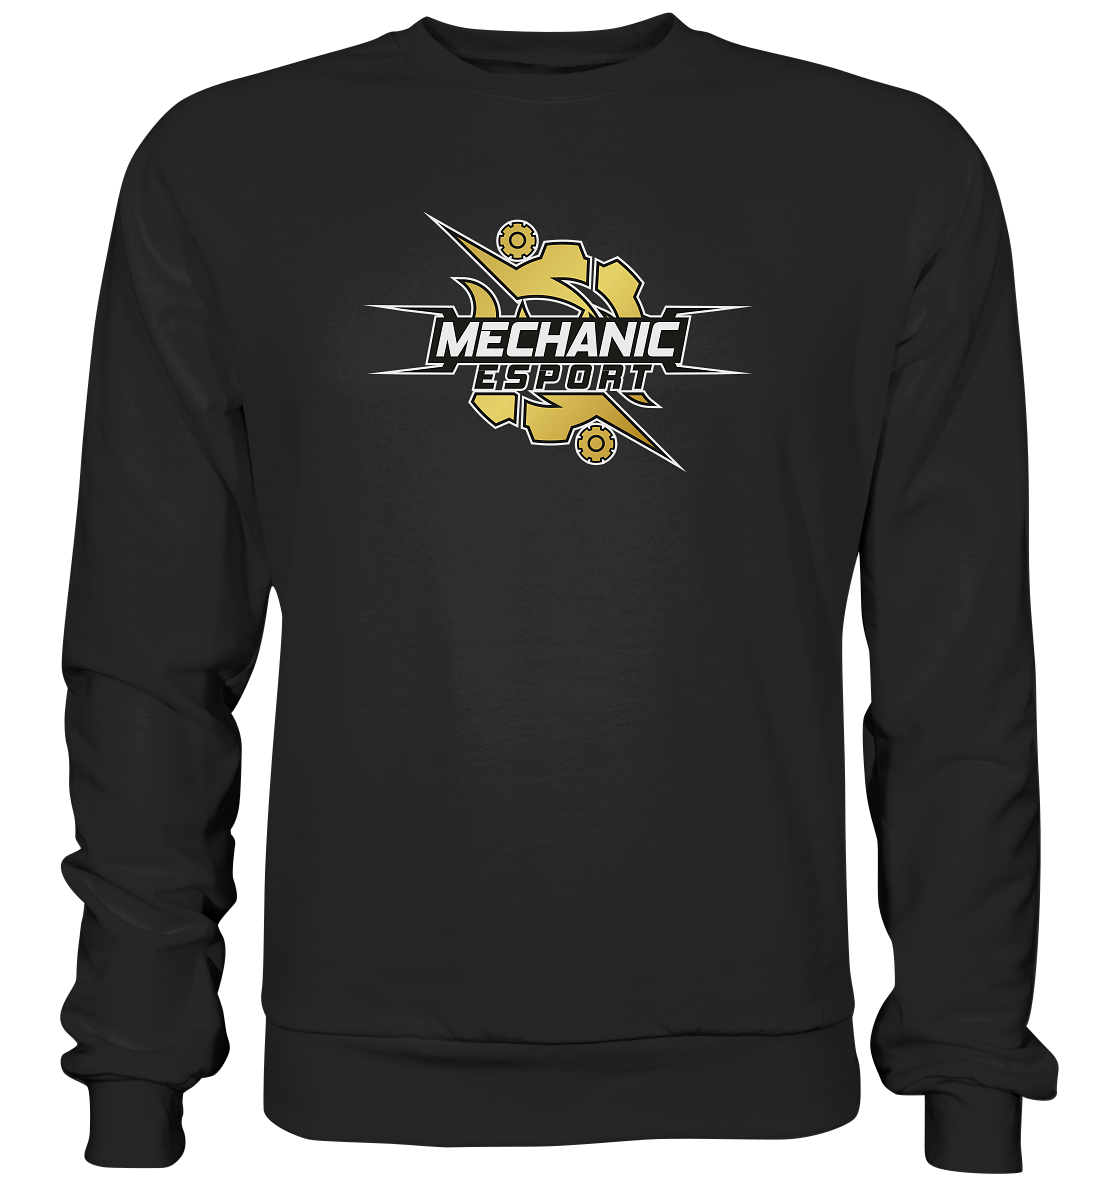 MECHANIC ESPORTS - Basic Sweatshirt